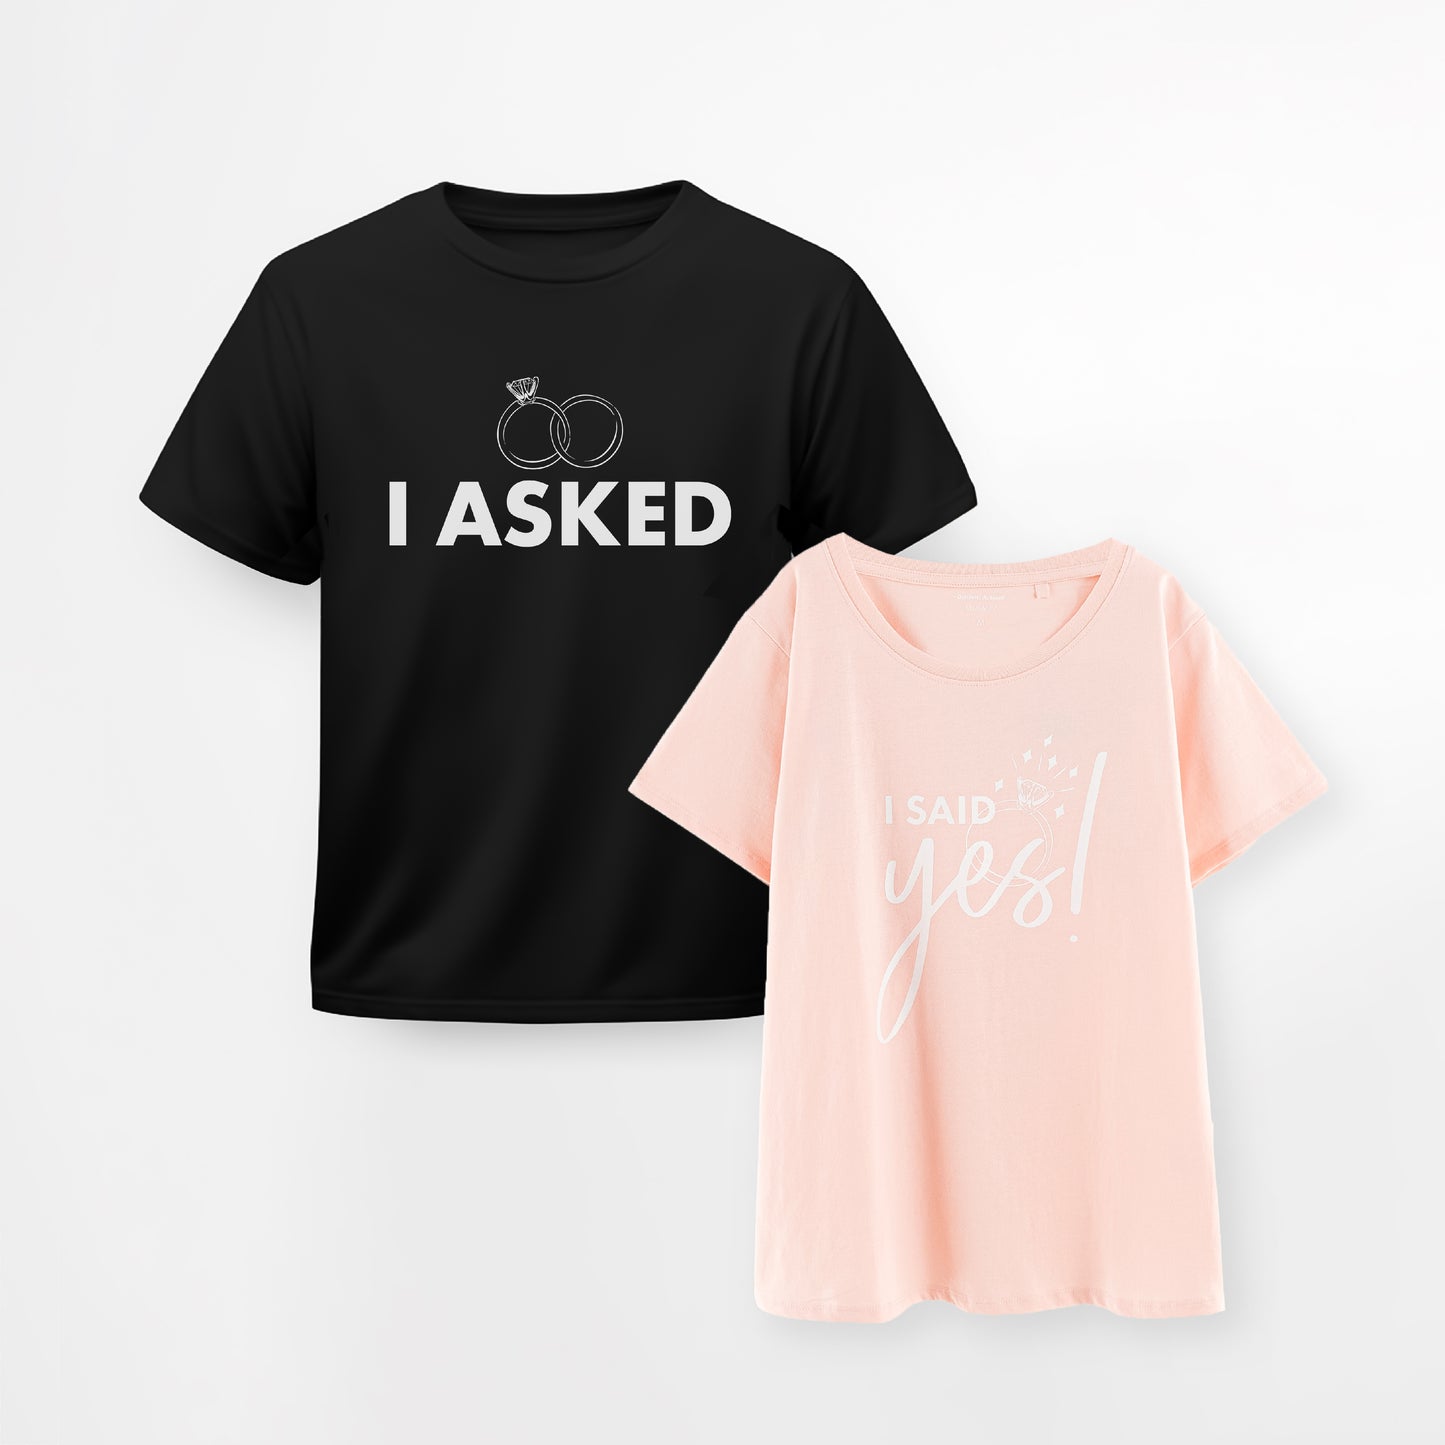 I Said Yes and I Asked T-Shirt Set